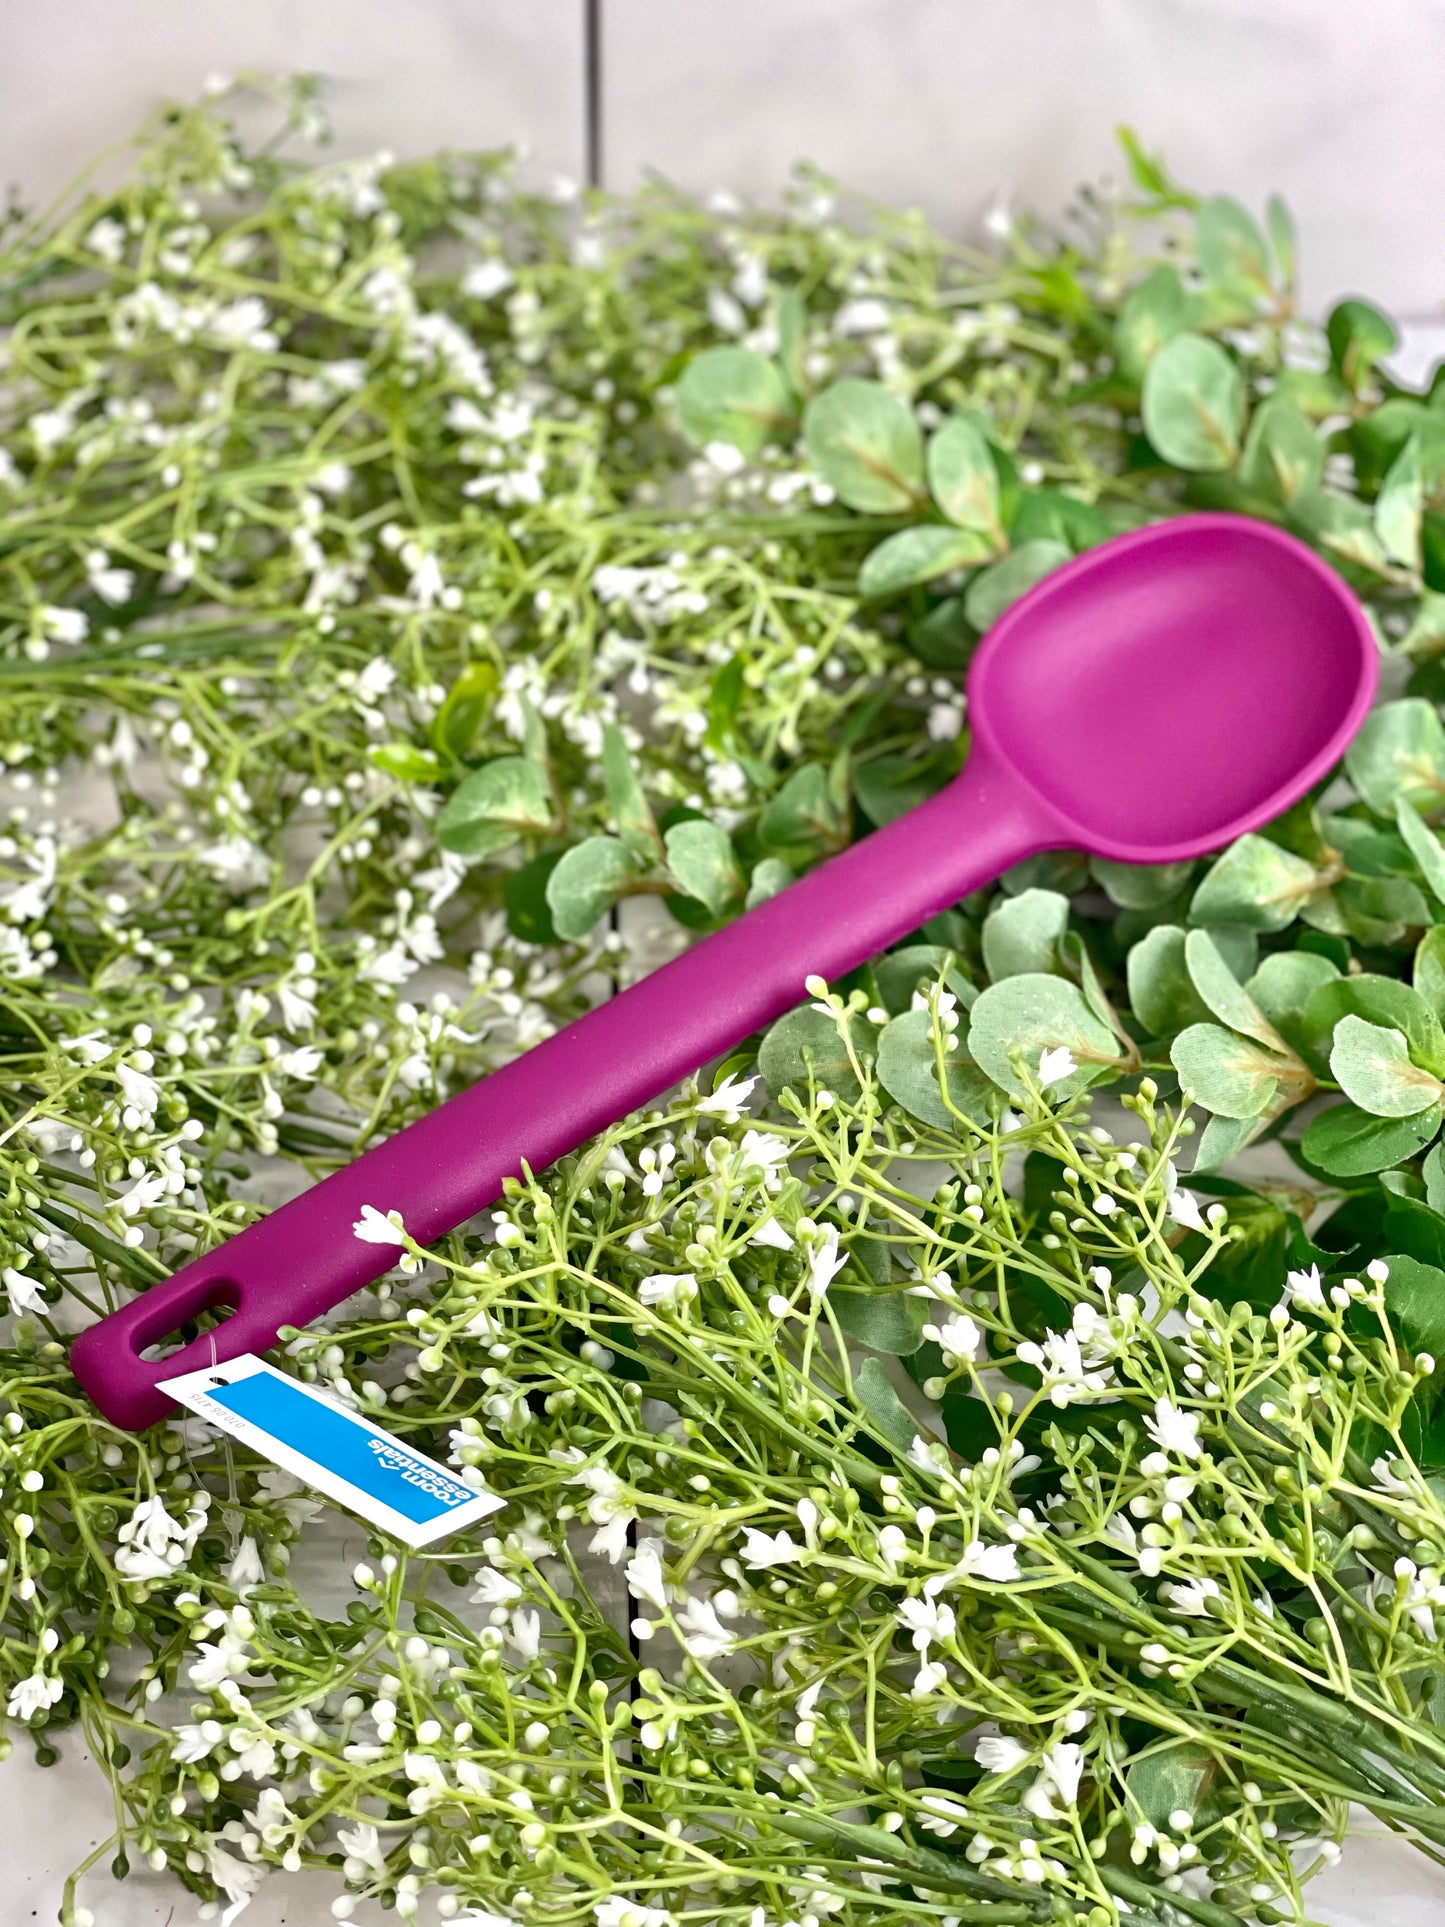 Room Essentials Purple Silicone Spoon